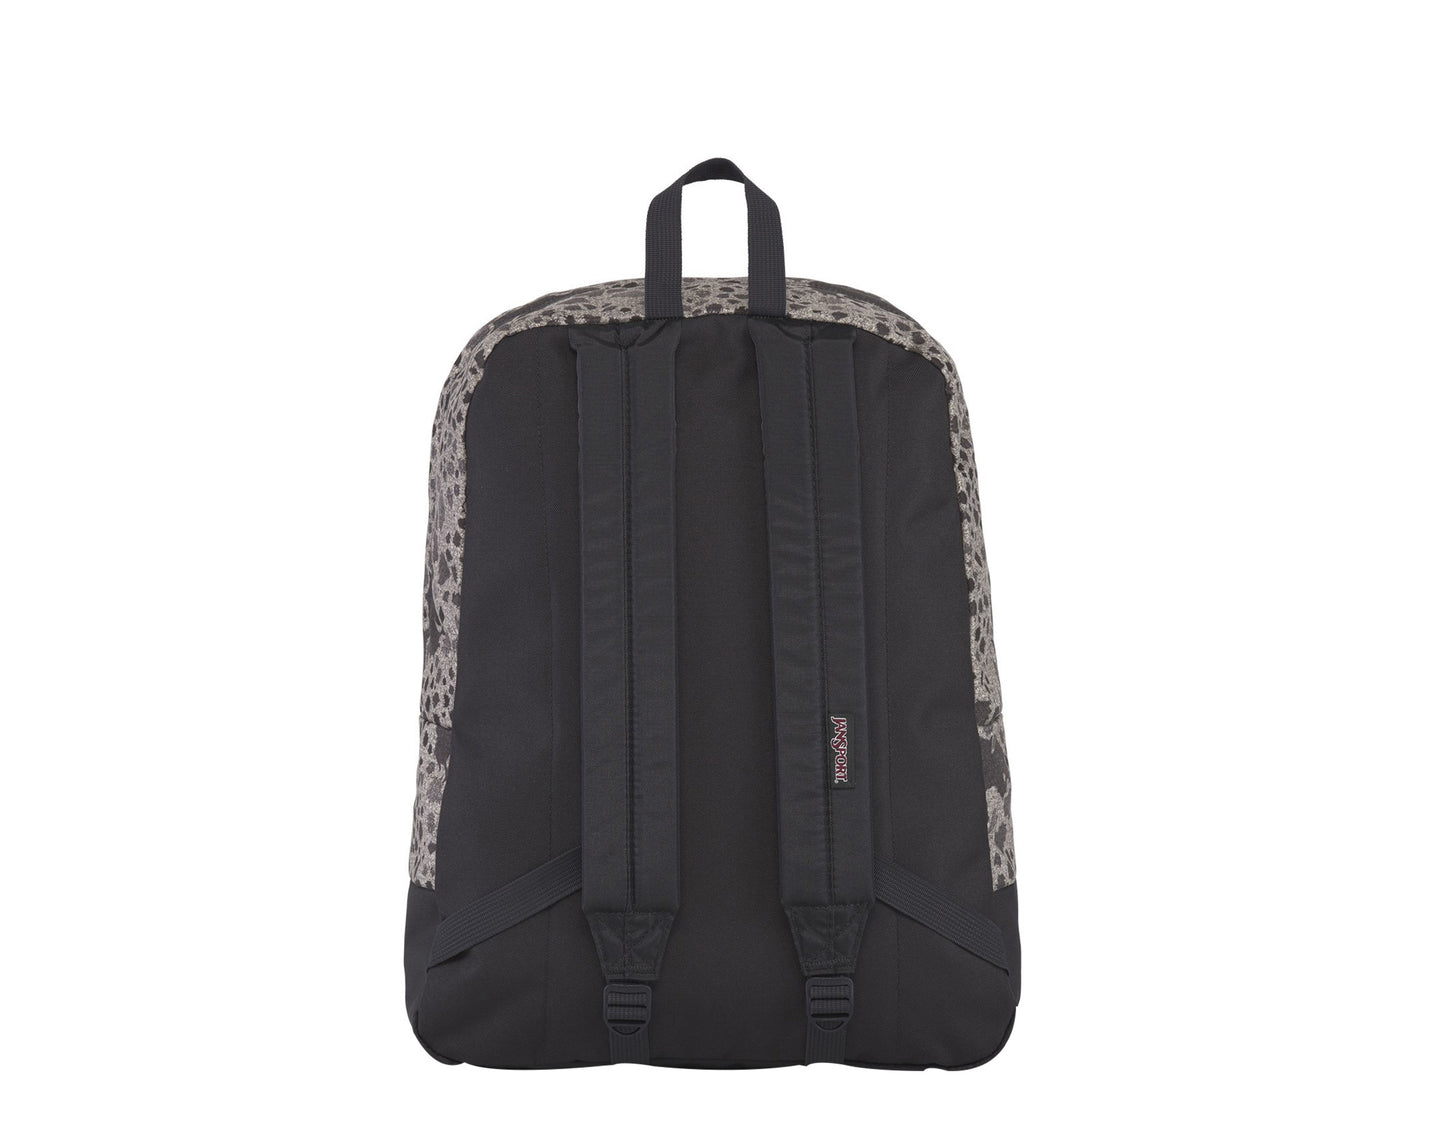 Jansport Black Label SuperBreak Stony Camo Print Backpack JS00T60G5R7